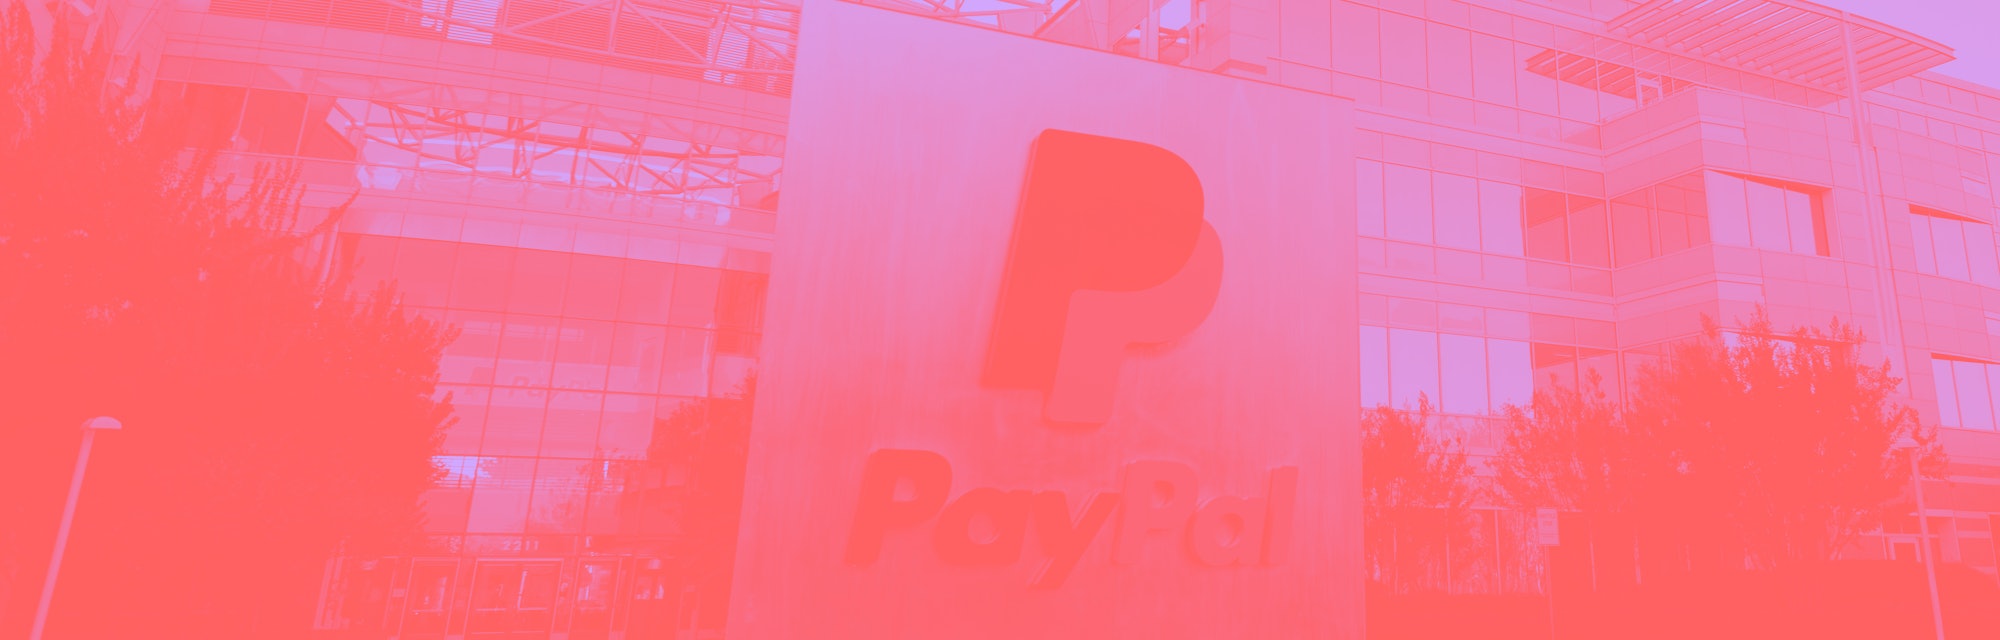 PayPal logo outside its company headquarters.